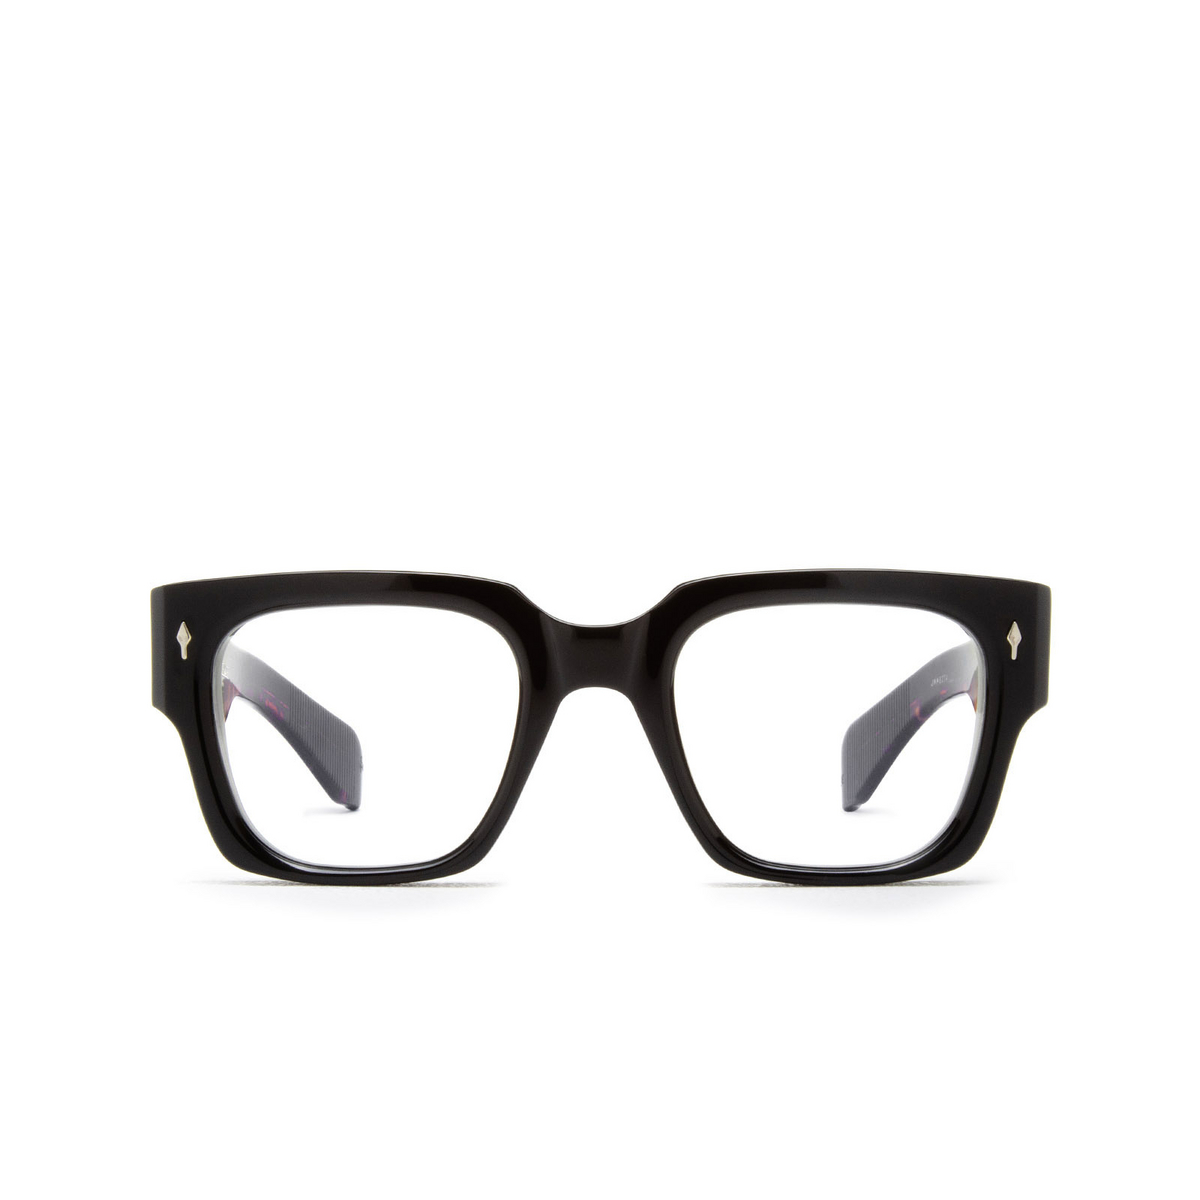 Jacques Marie Mage ENZO OPTIC Eyeglasses NOIR 7 - front view